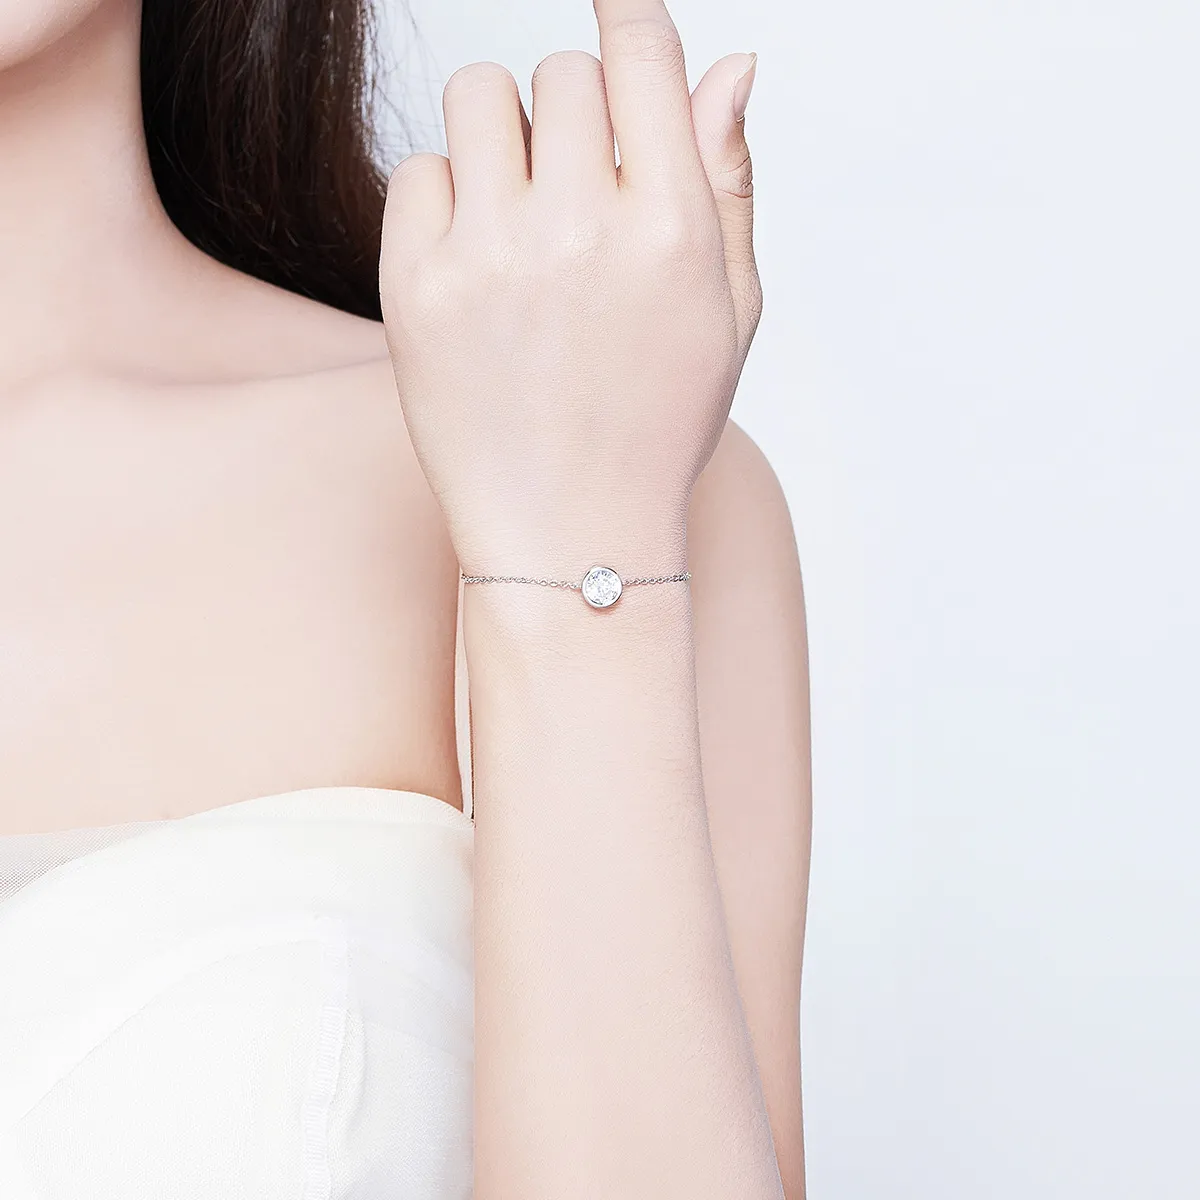 Pandora Style Silver Simple Chain Adjustable Bracelet - SCB157